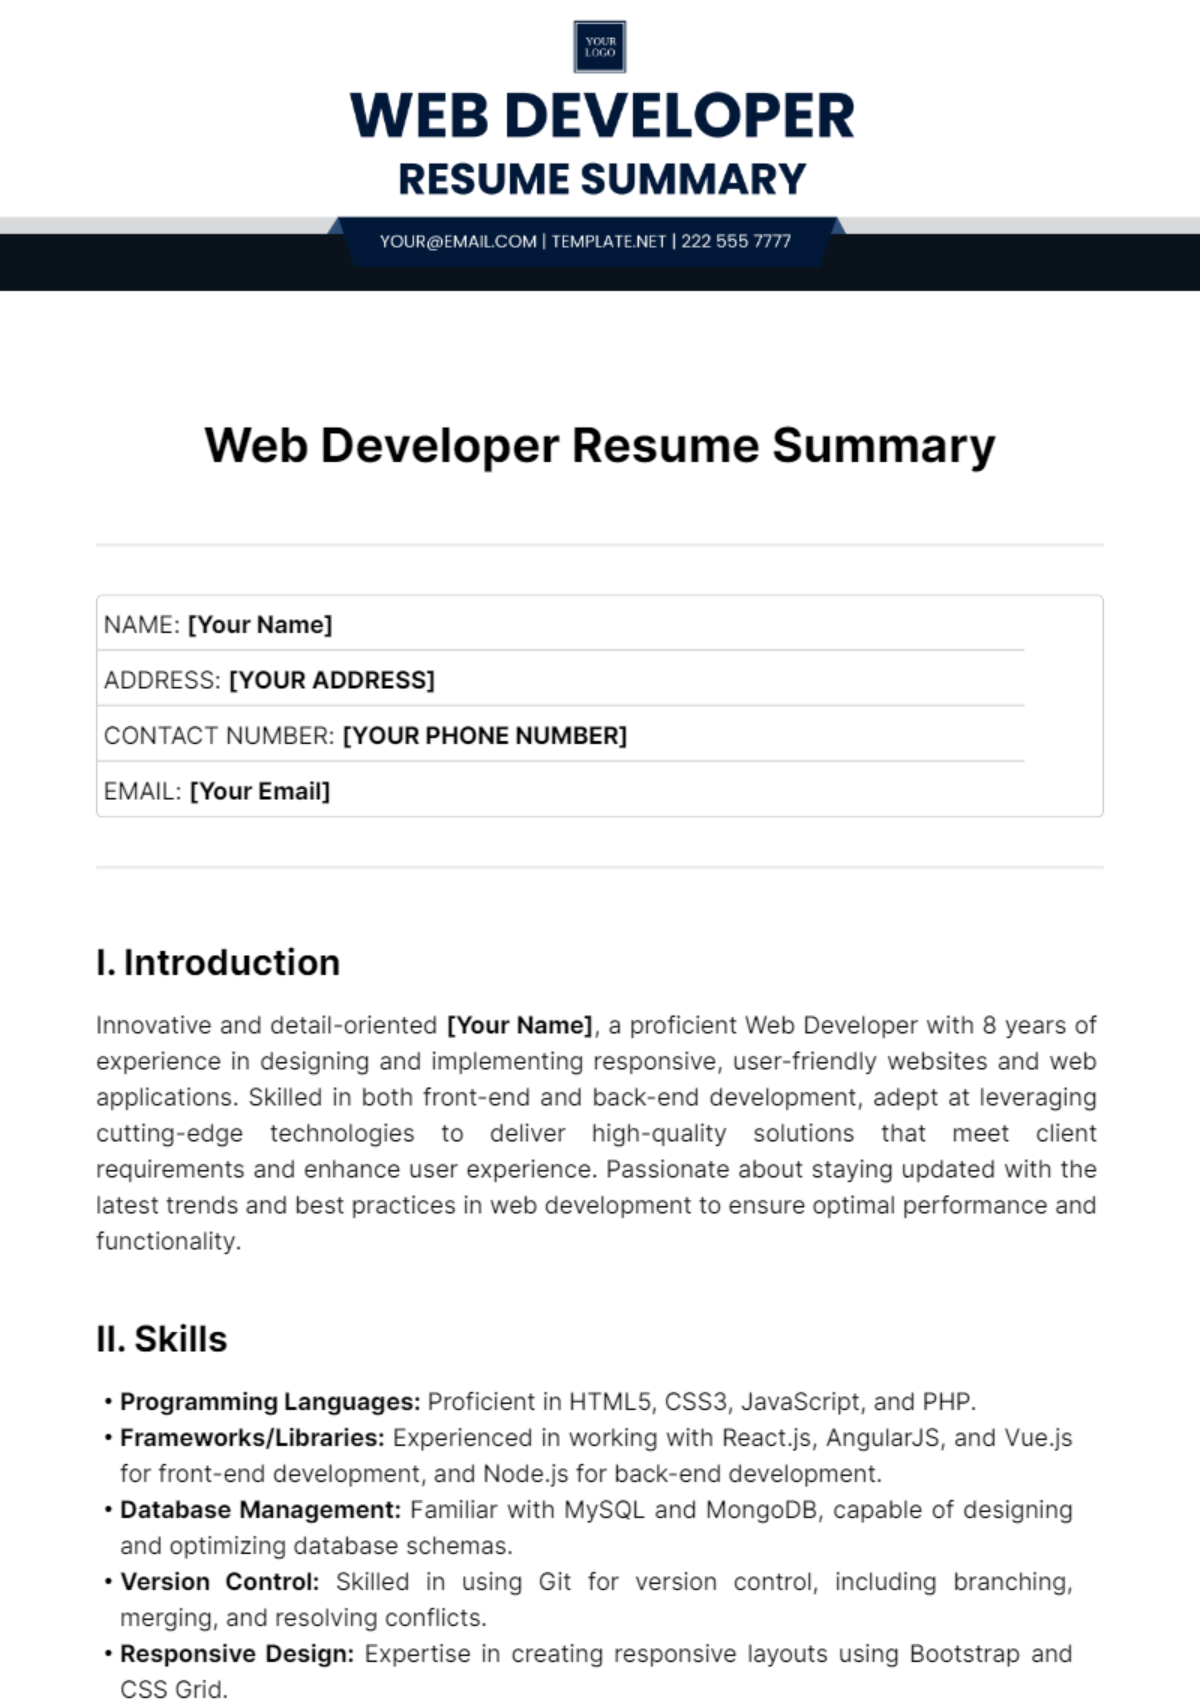 Free Web Developer Resume Summary Template